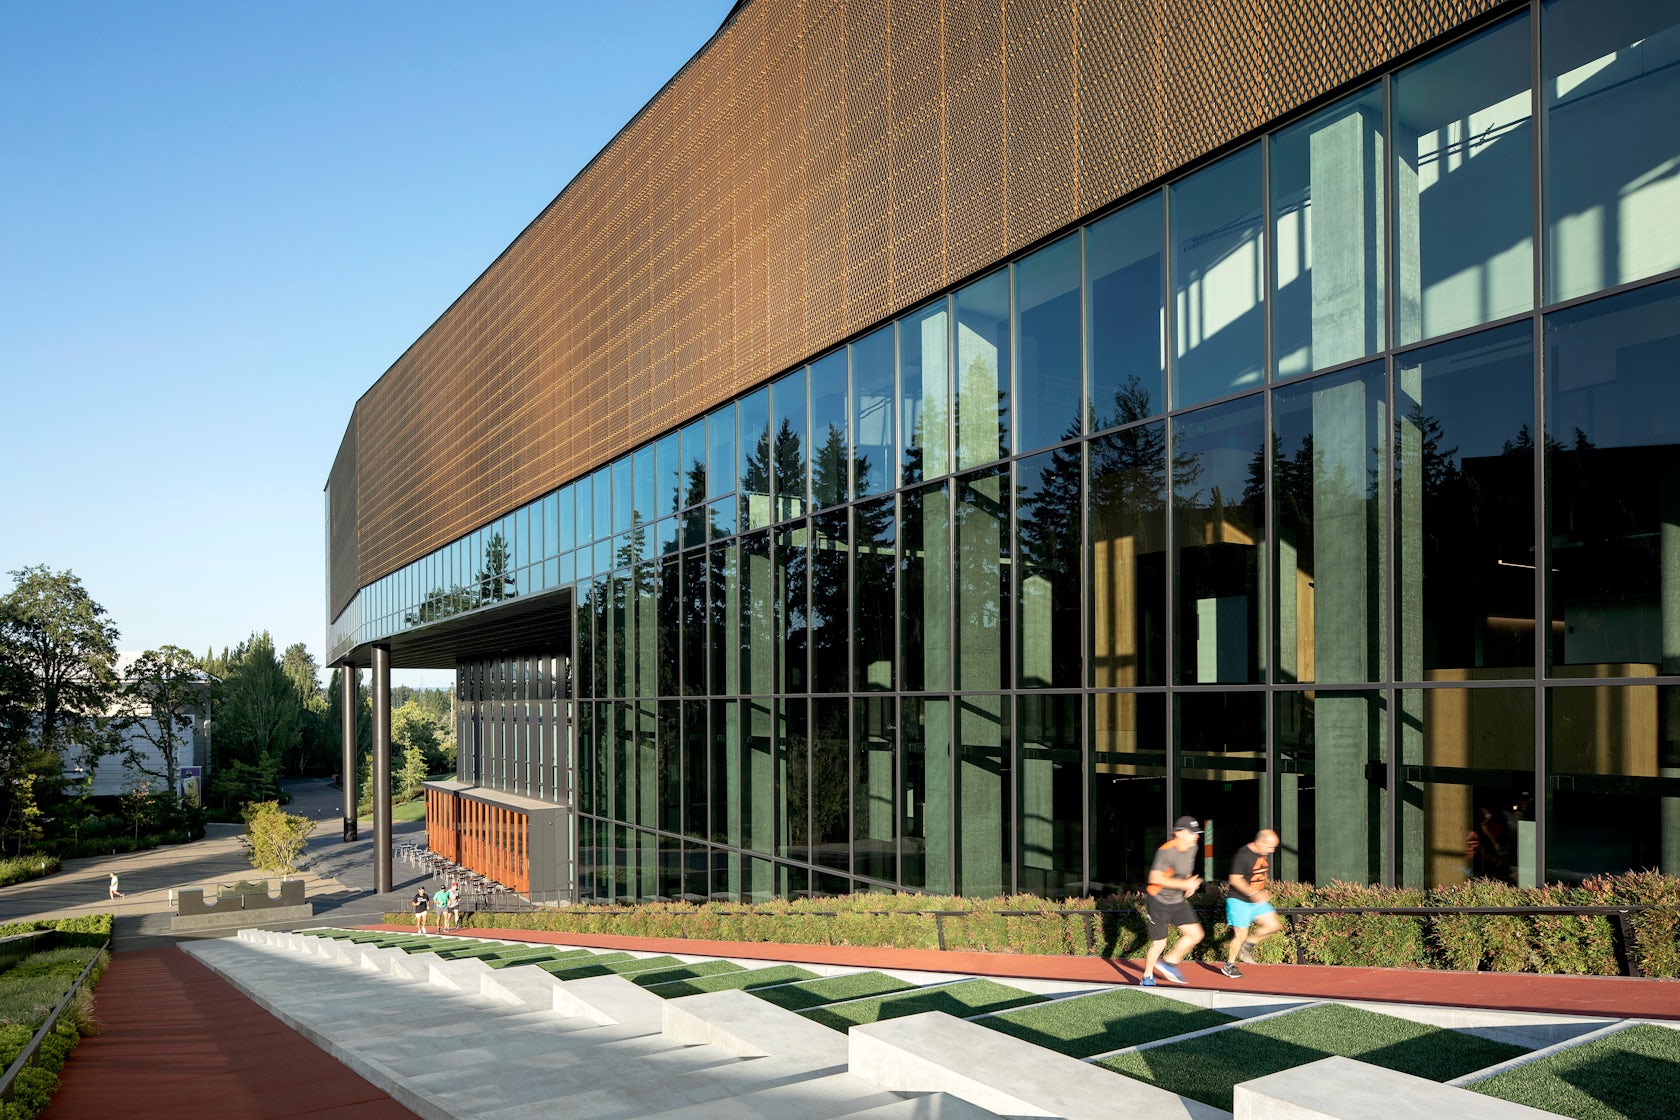 Olson Kundig — The LeBron James Innovation Center at Nike World